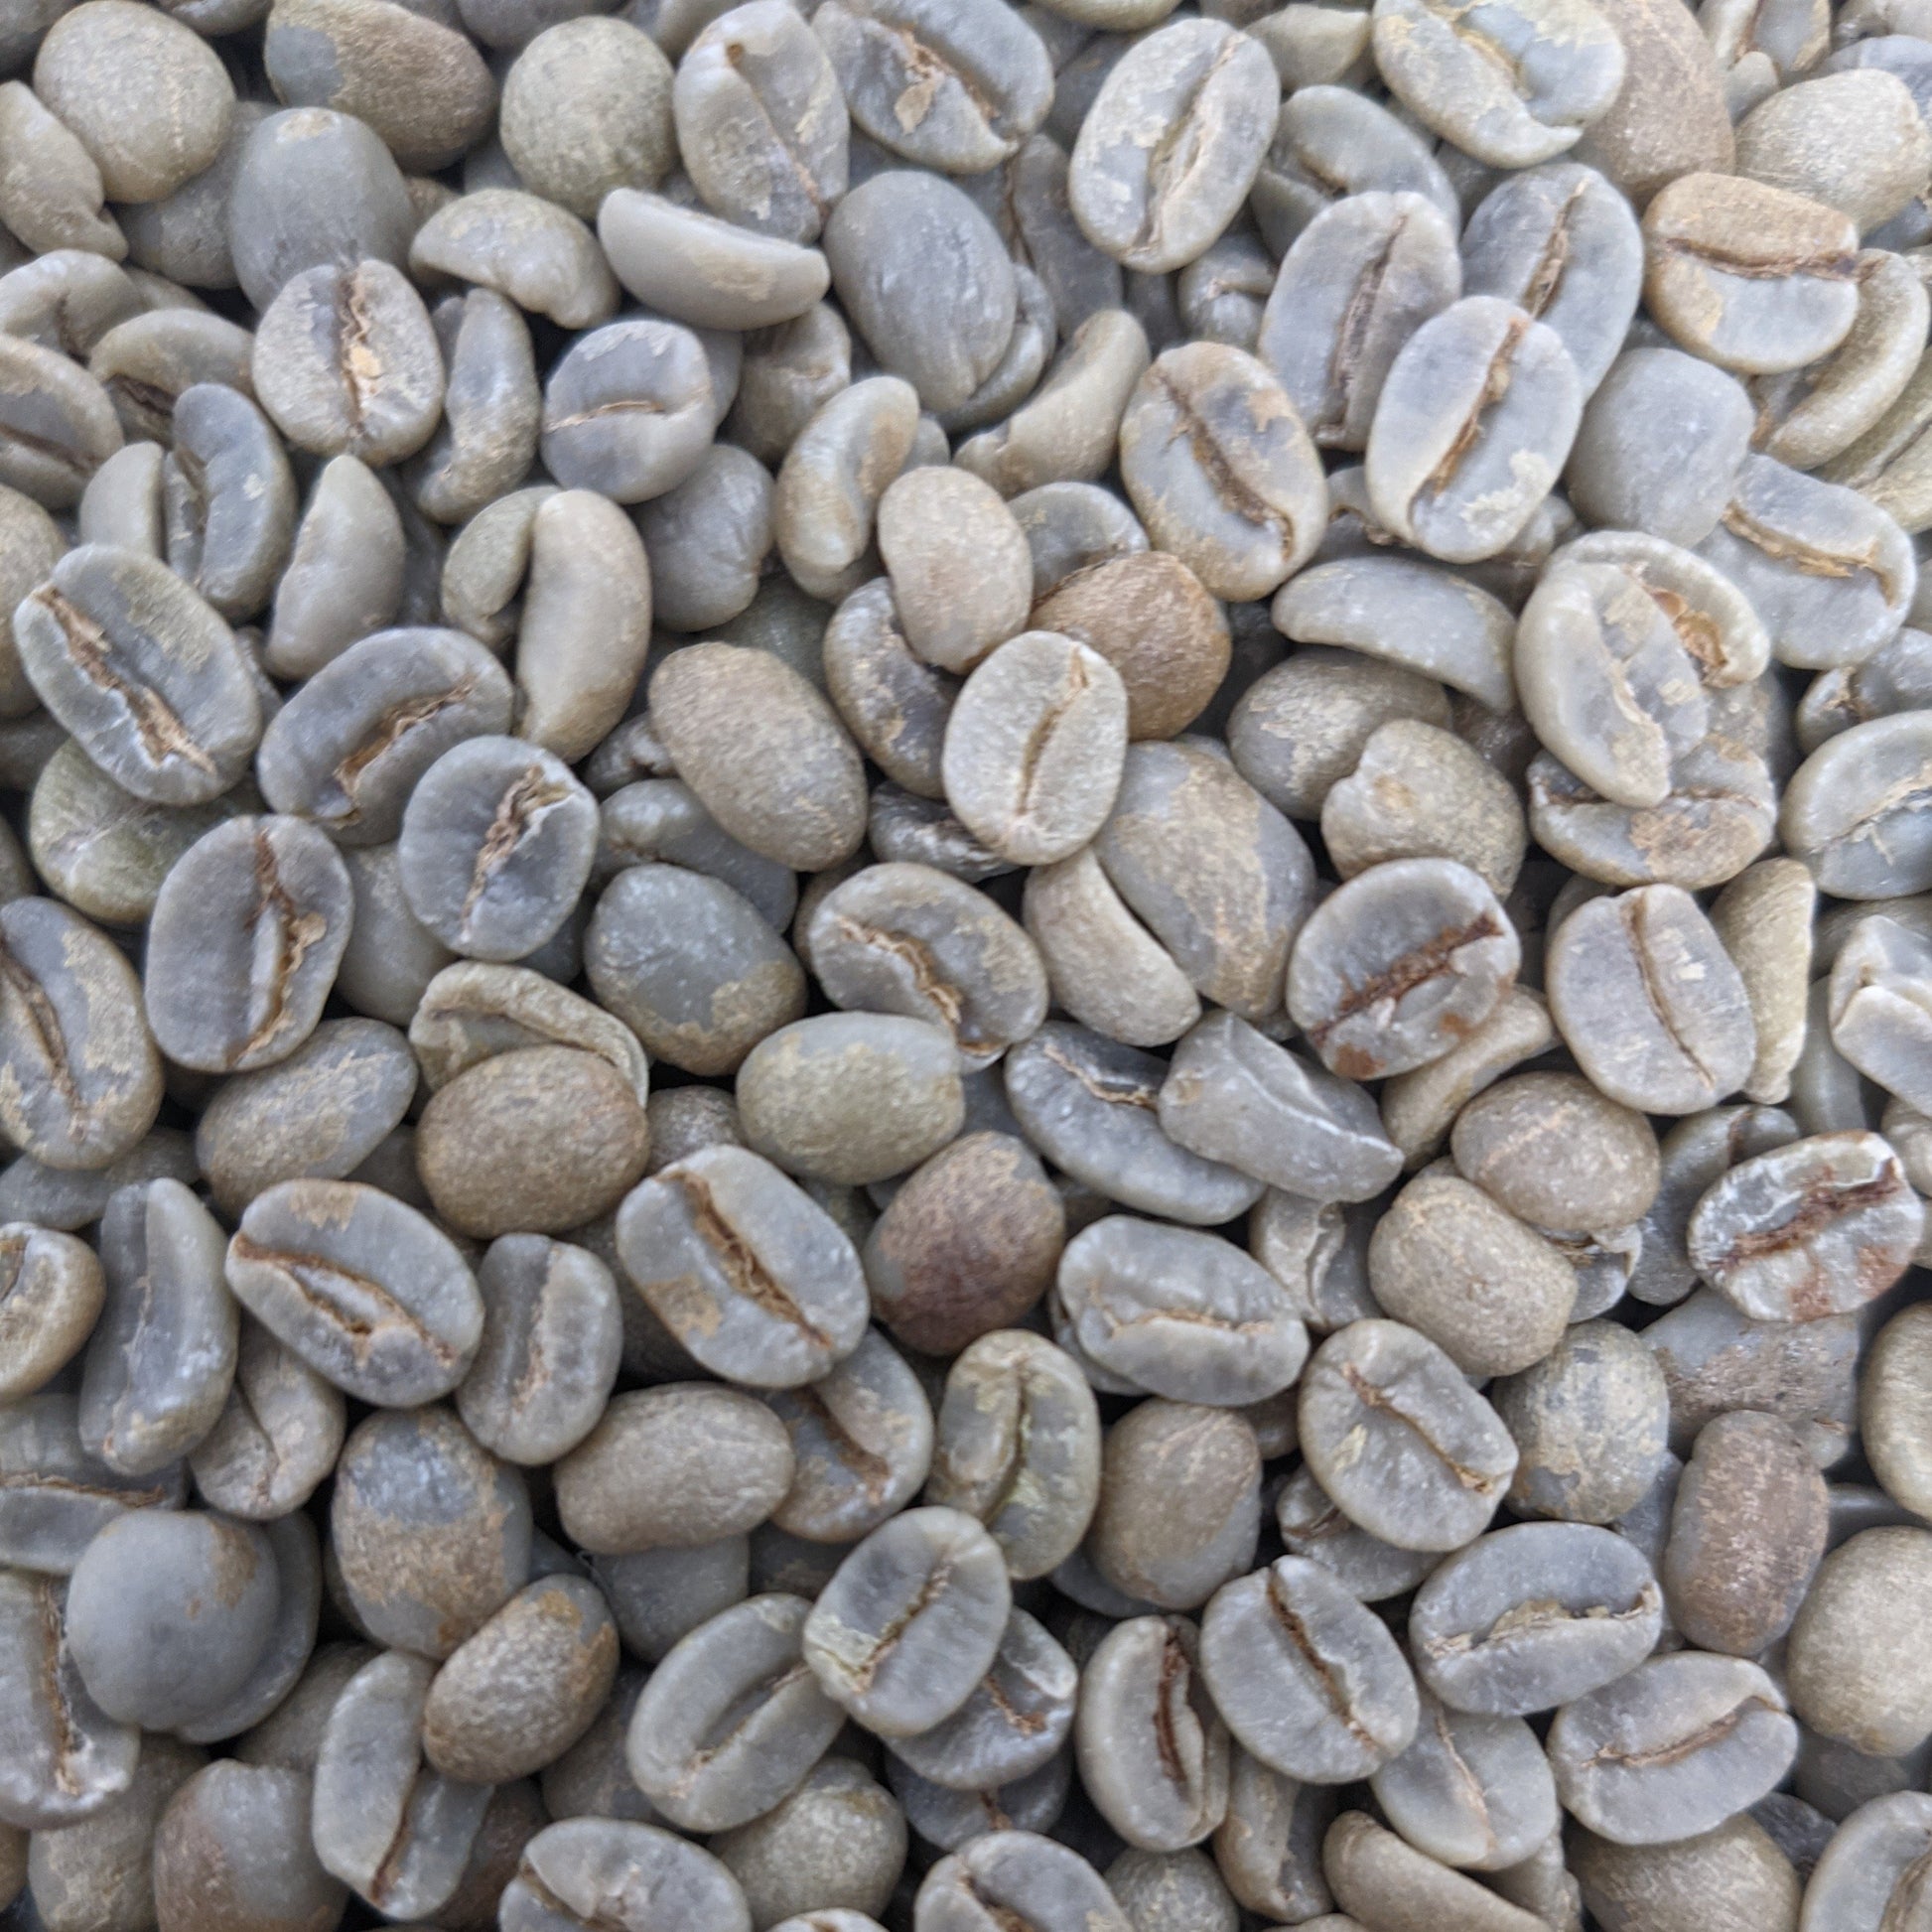 unroasted coffee beans from the Chapada de Minas region of Brazil